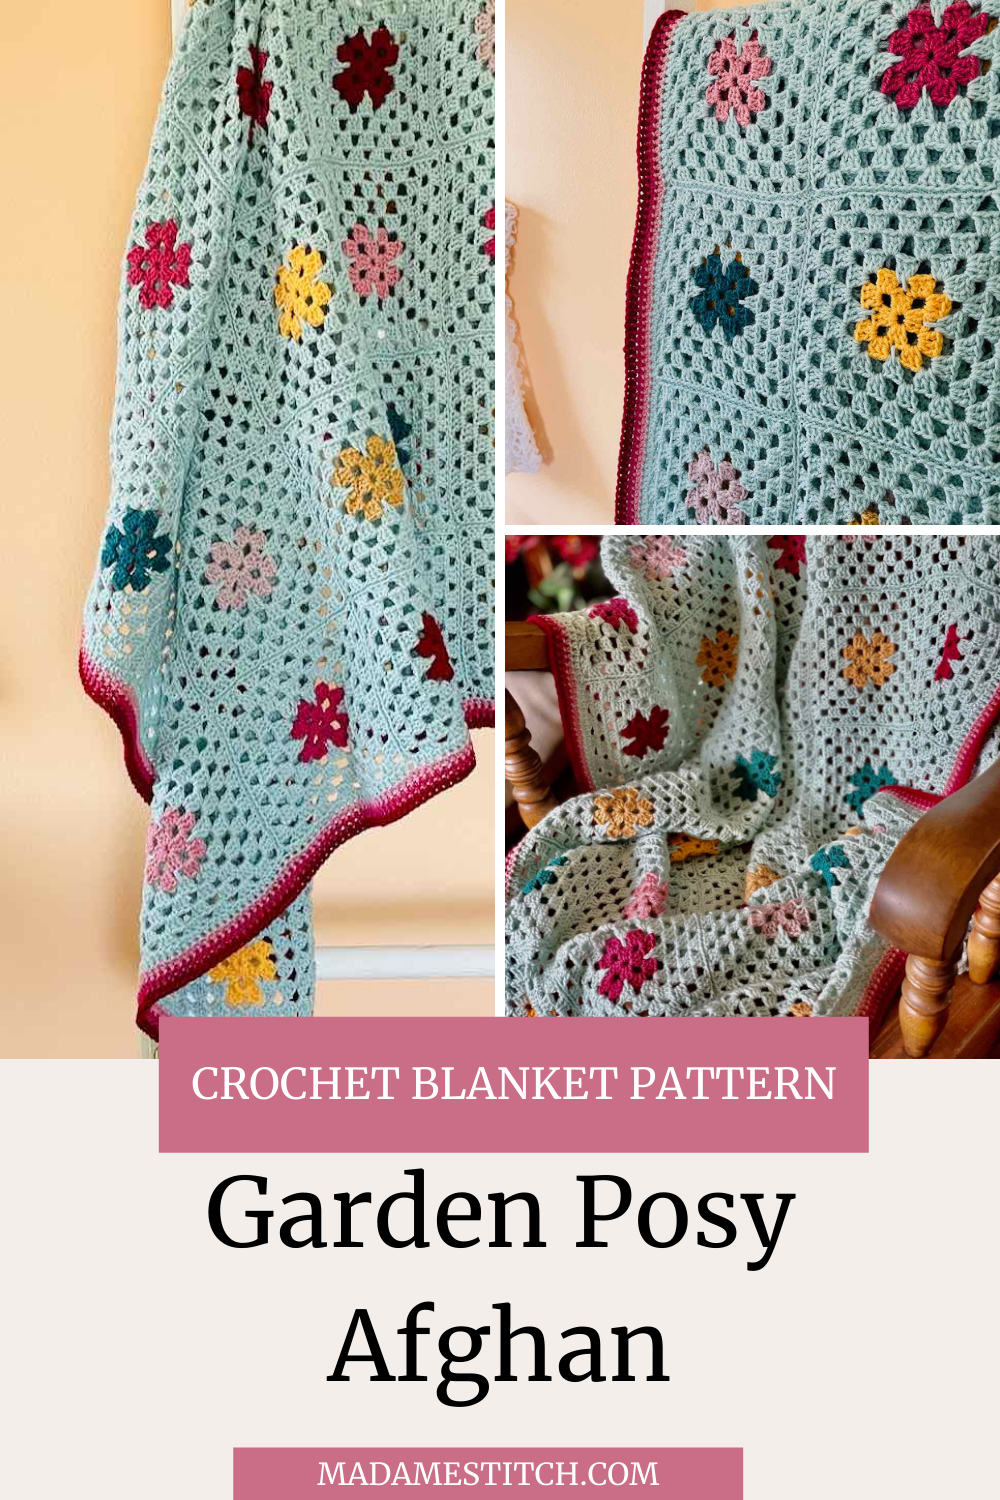 Garden Posy Granny Afghan crochet pattern